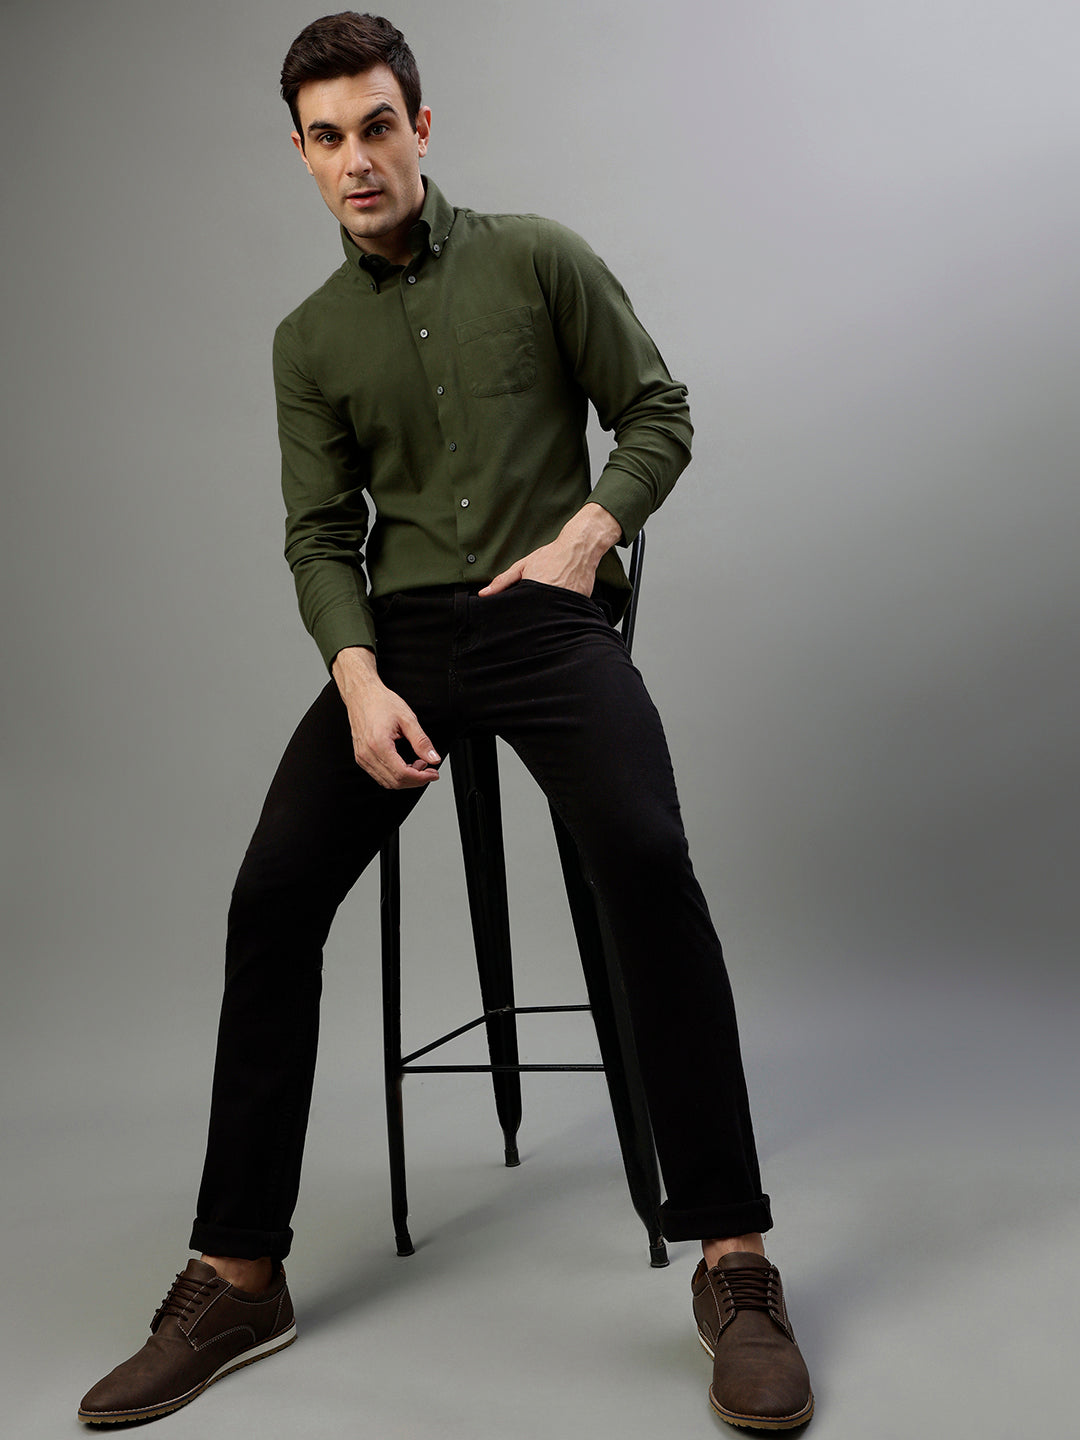 Fostino Plain Lycra Dark Green Full Sleeves Shirt - Fostino Shirts